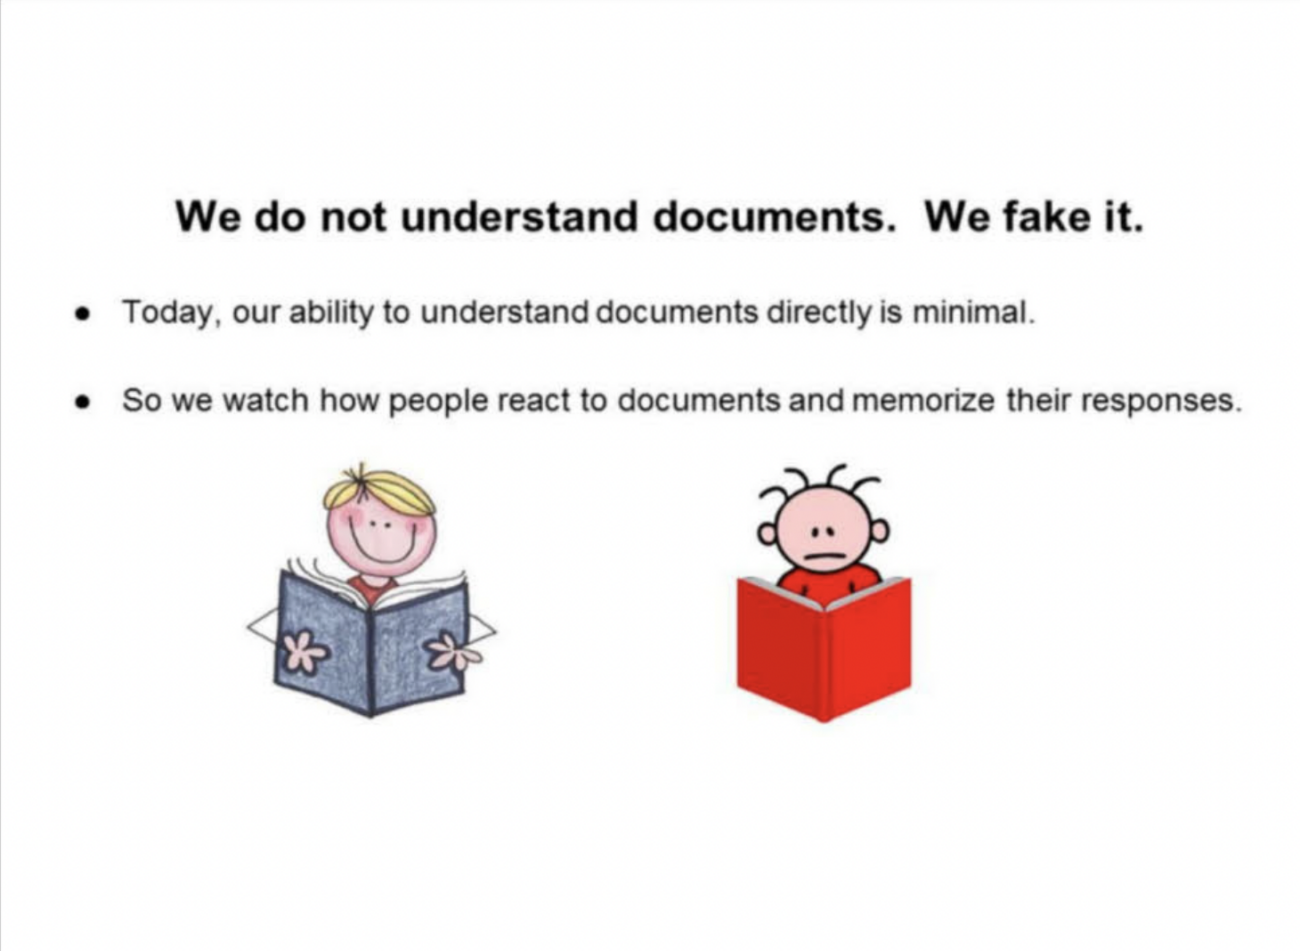 Screenshot from the Google 2020 antitrust trial evidence - Google on understanding documents